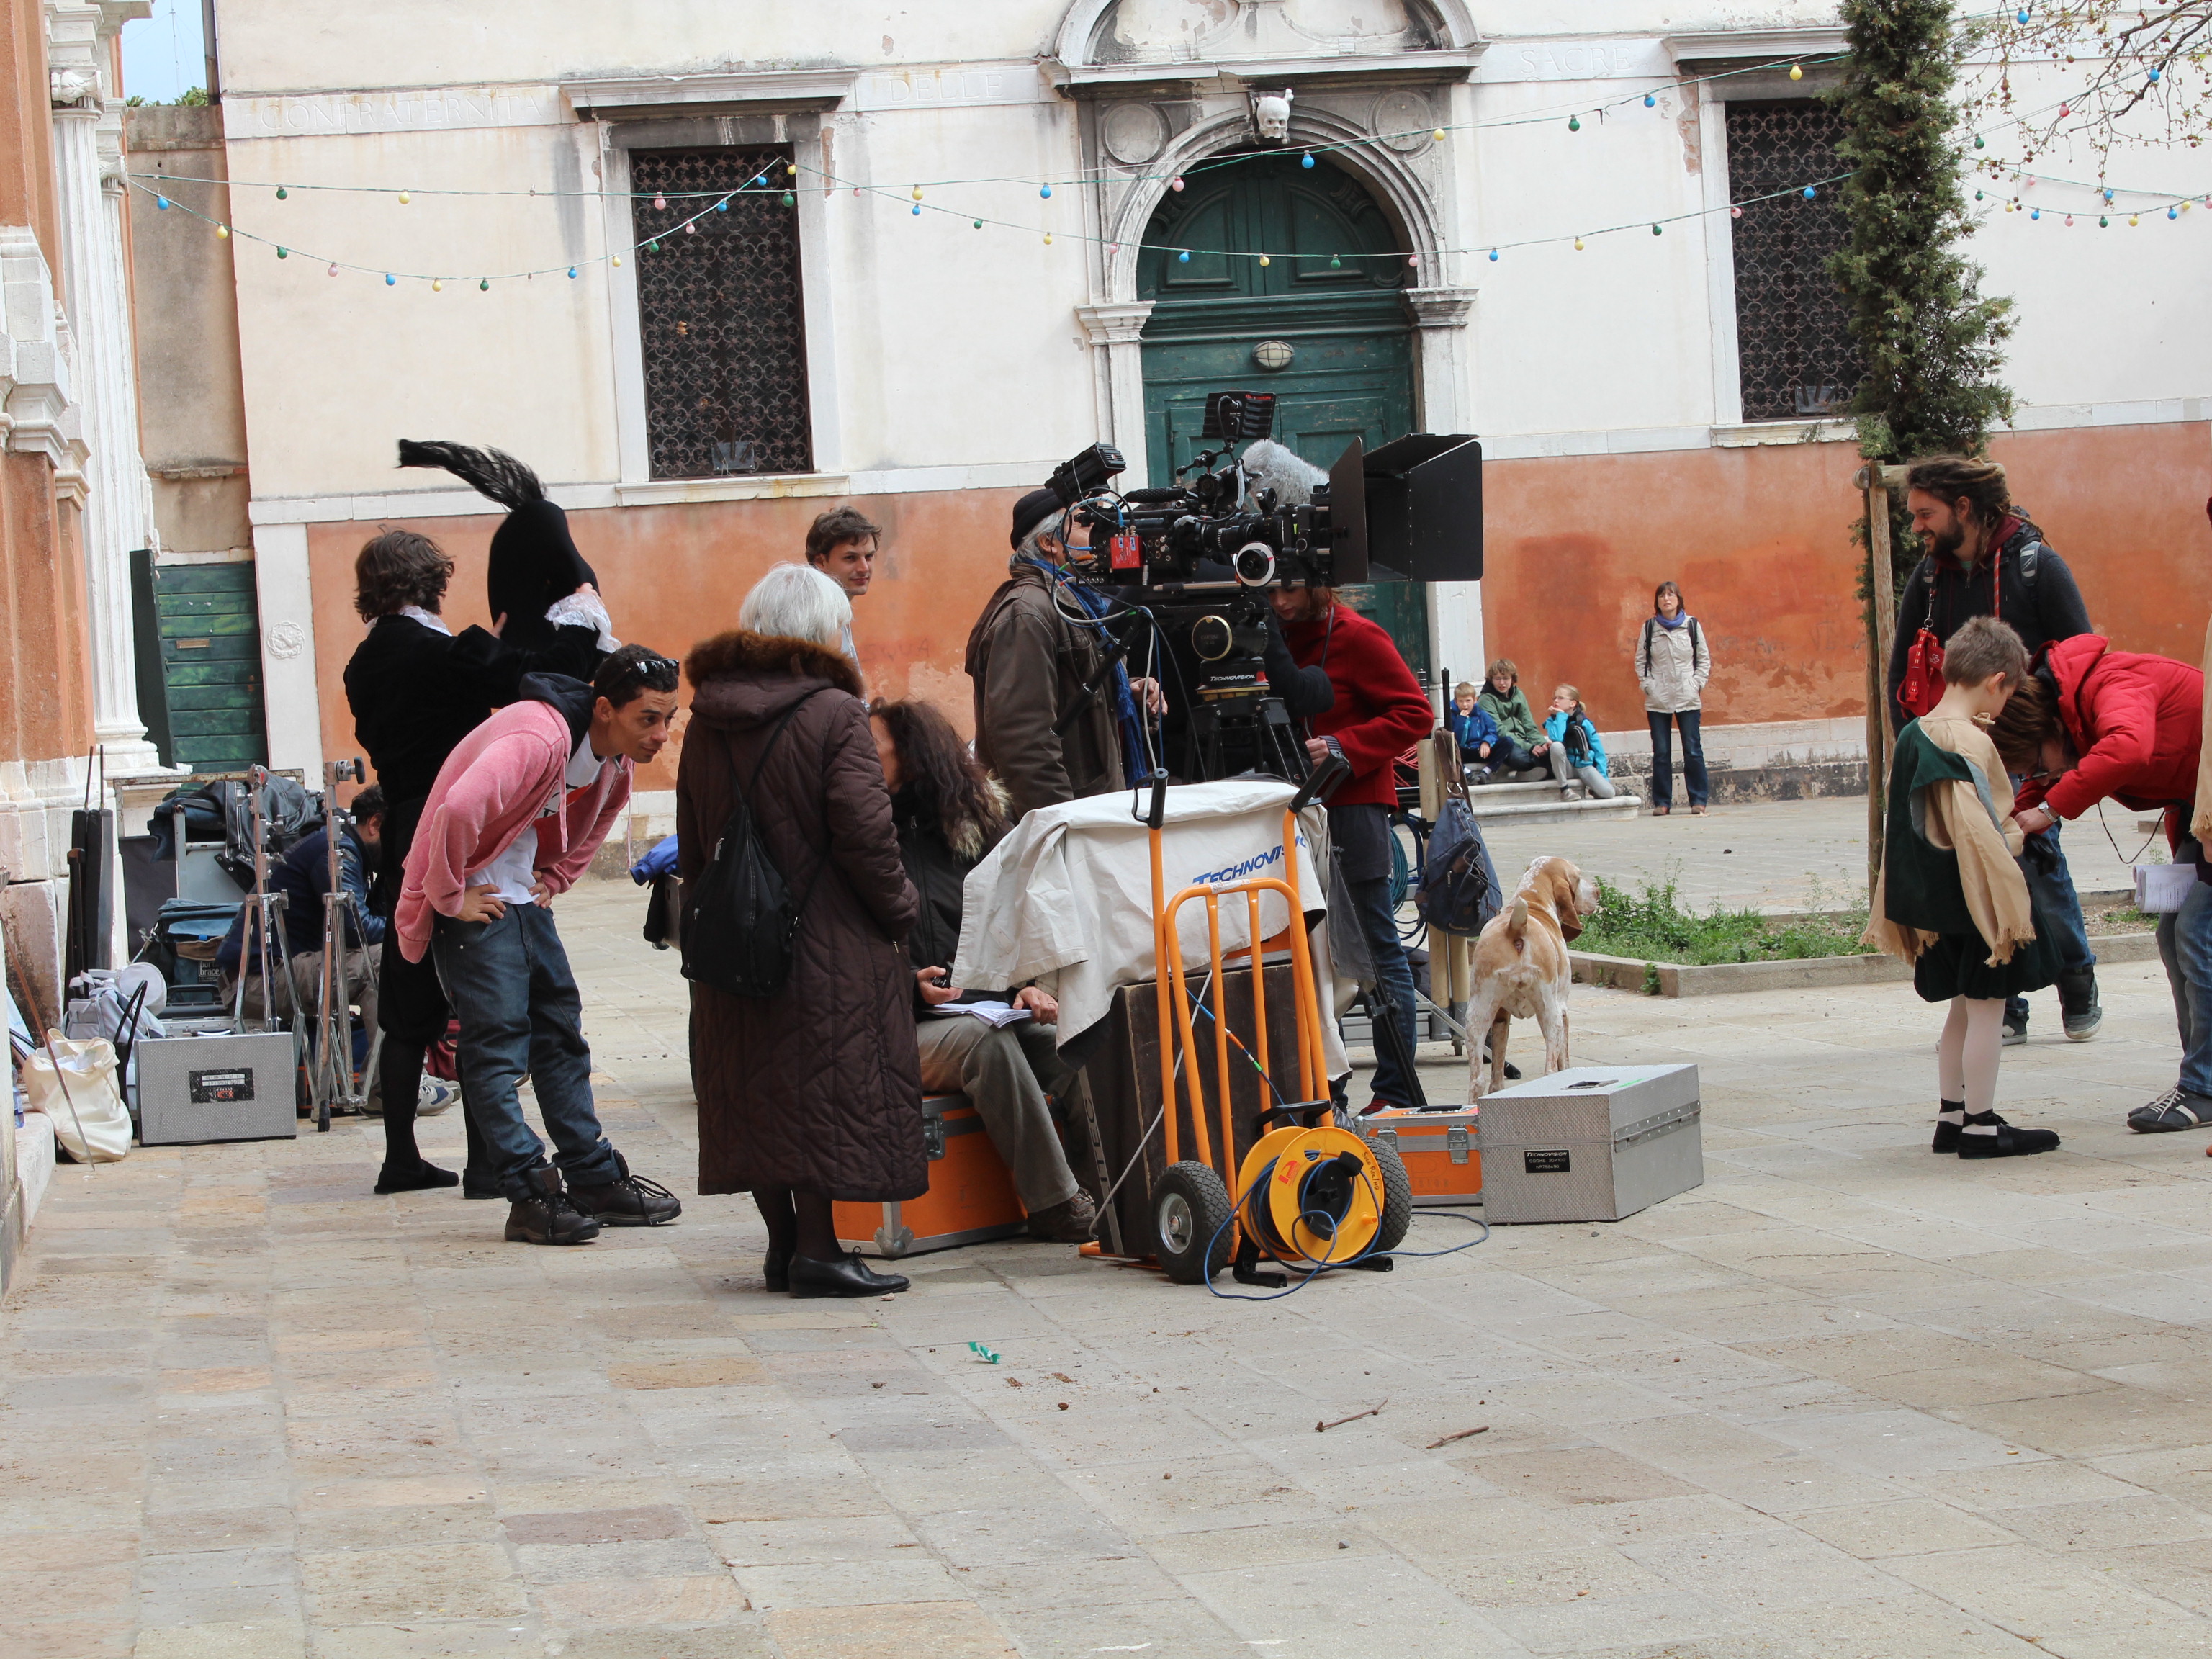 Looking at the scene with the Italian director Serena Nono.